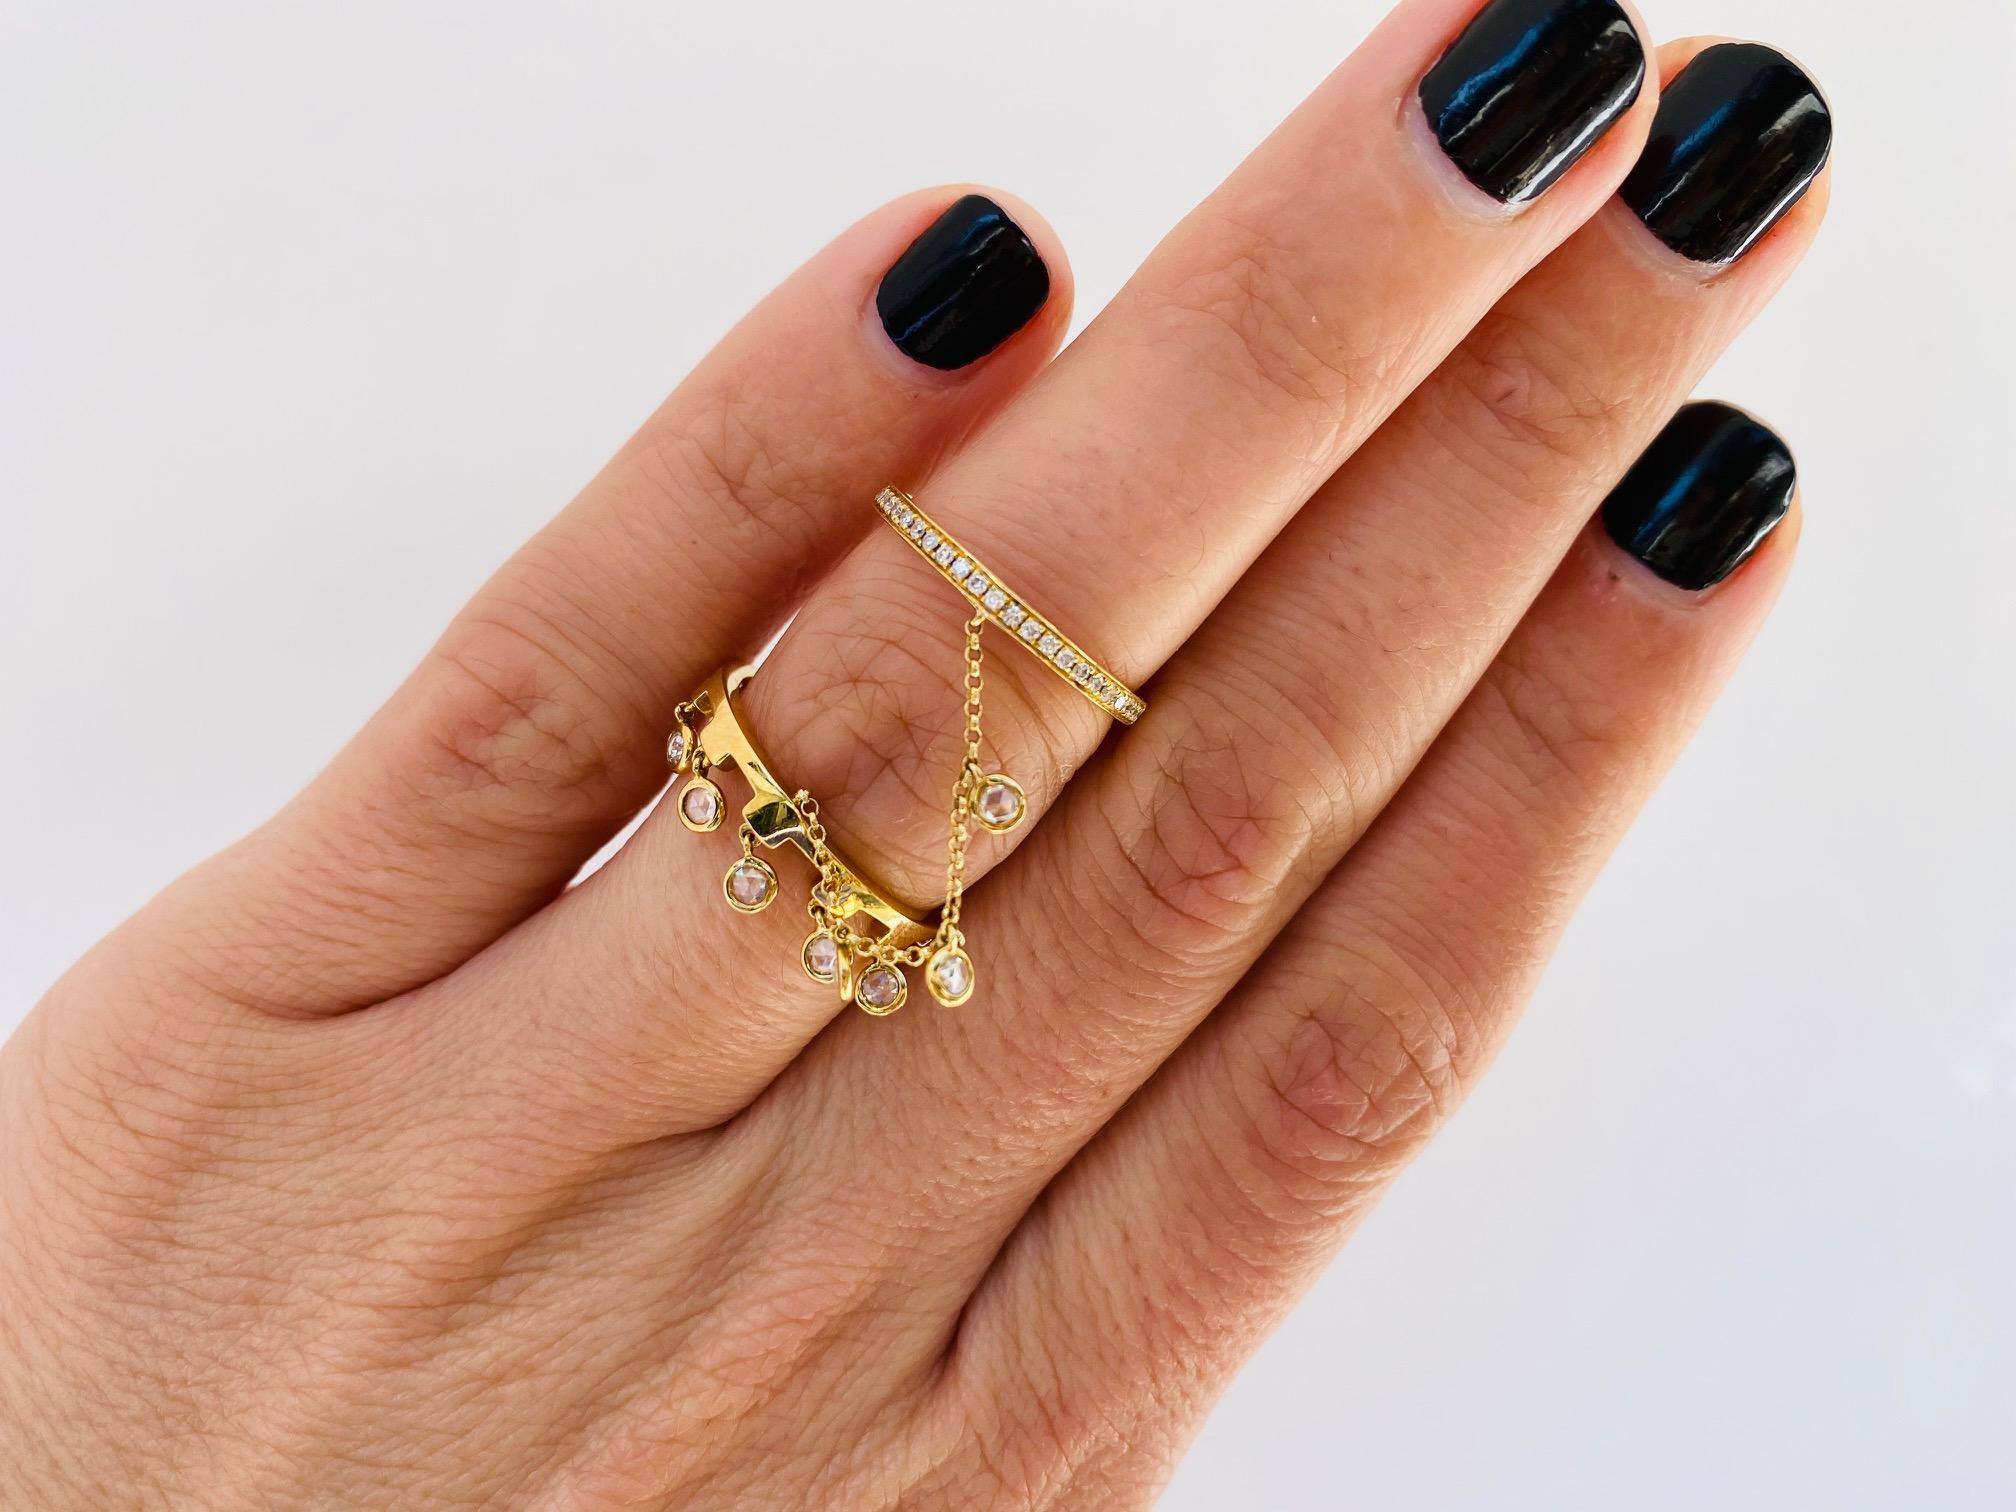 18K Yellow Gold, Rose-cut Diamond Double Finger Ring
.49 cts. Diamonds